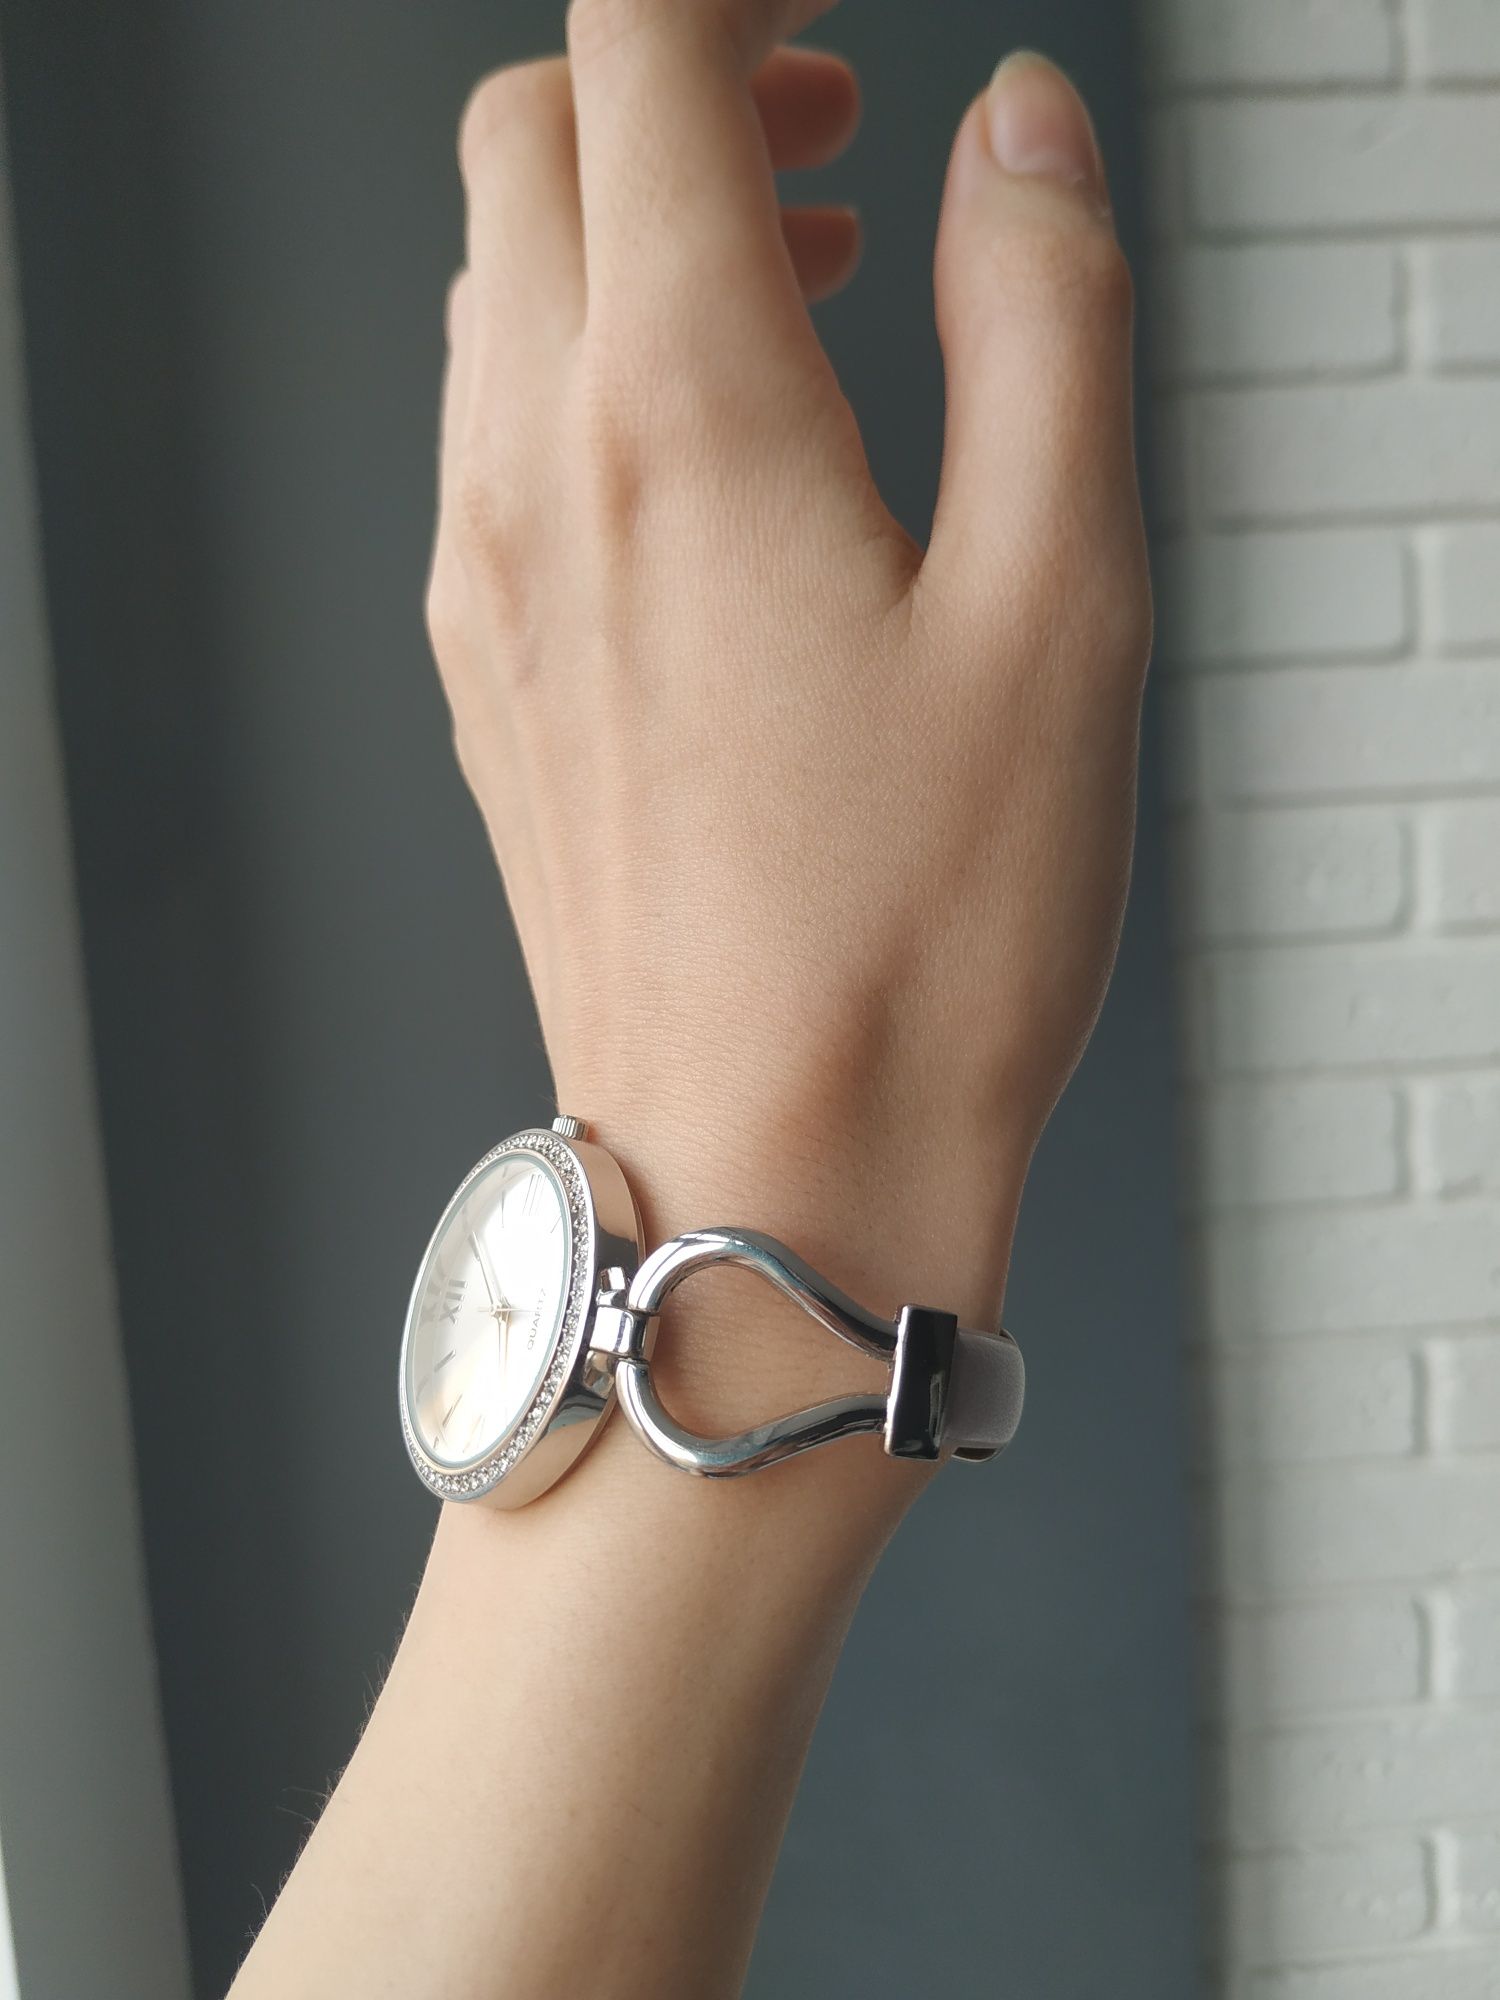 Годинник avon жіночий часы наручные кварц icon женские ейвон